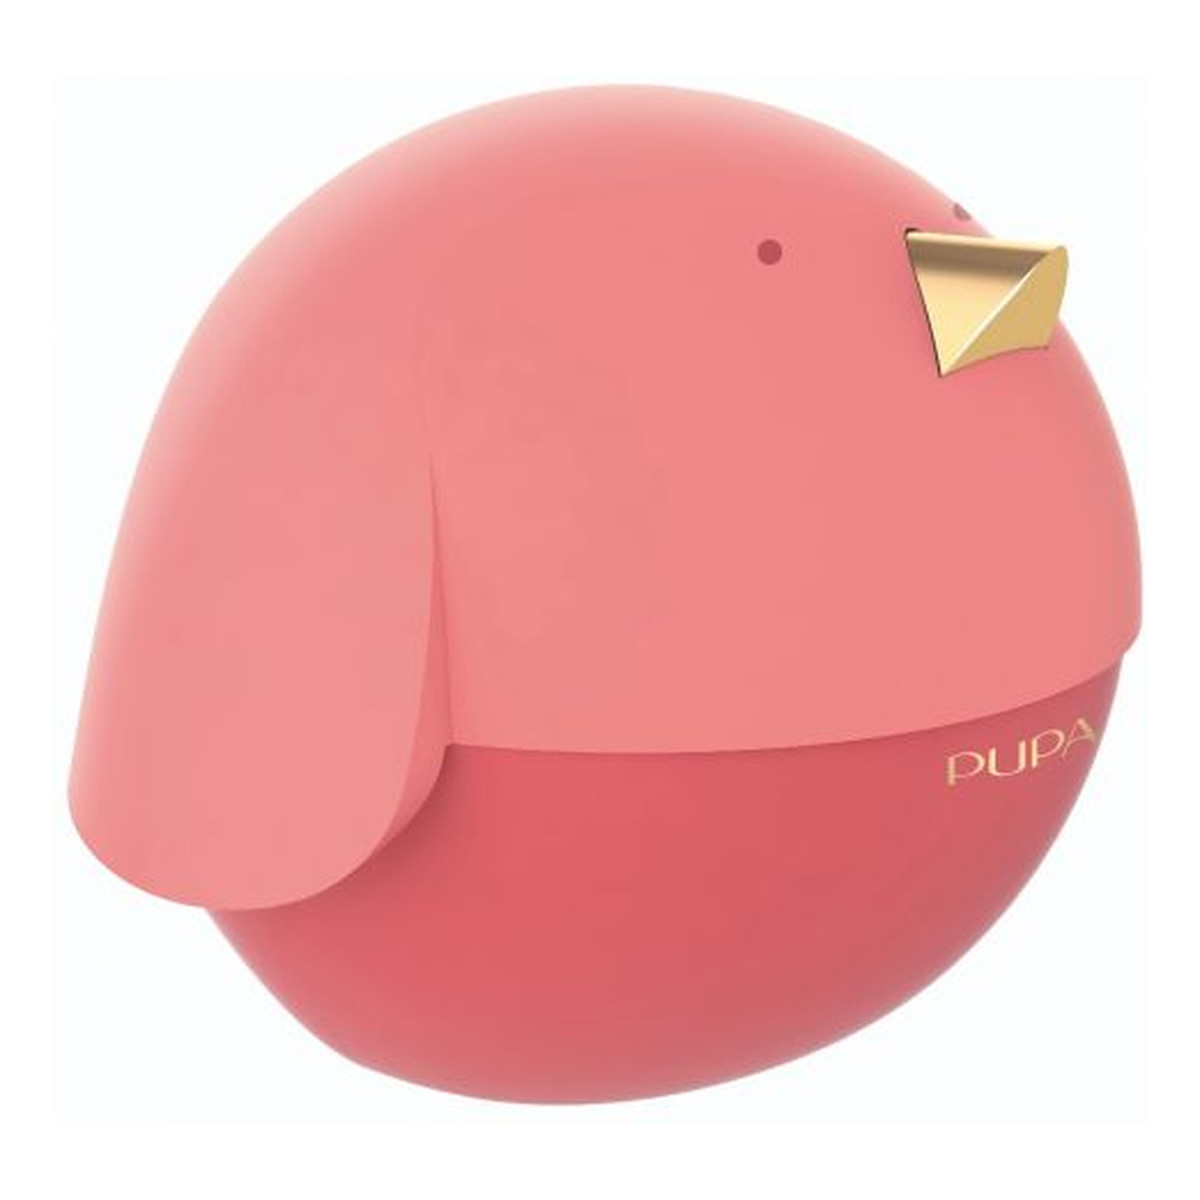 Pupa Milano Bird 1 zestaw do makijażu ust Pink 5g